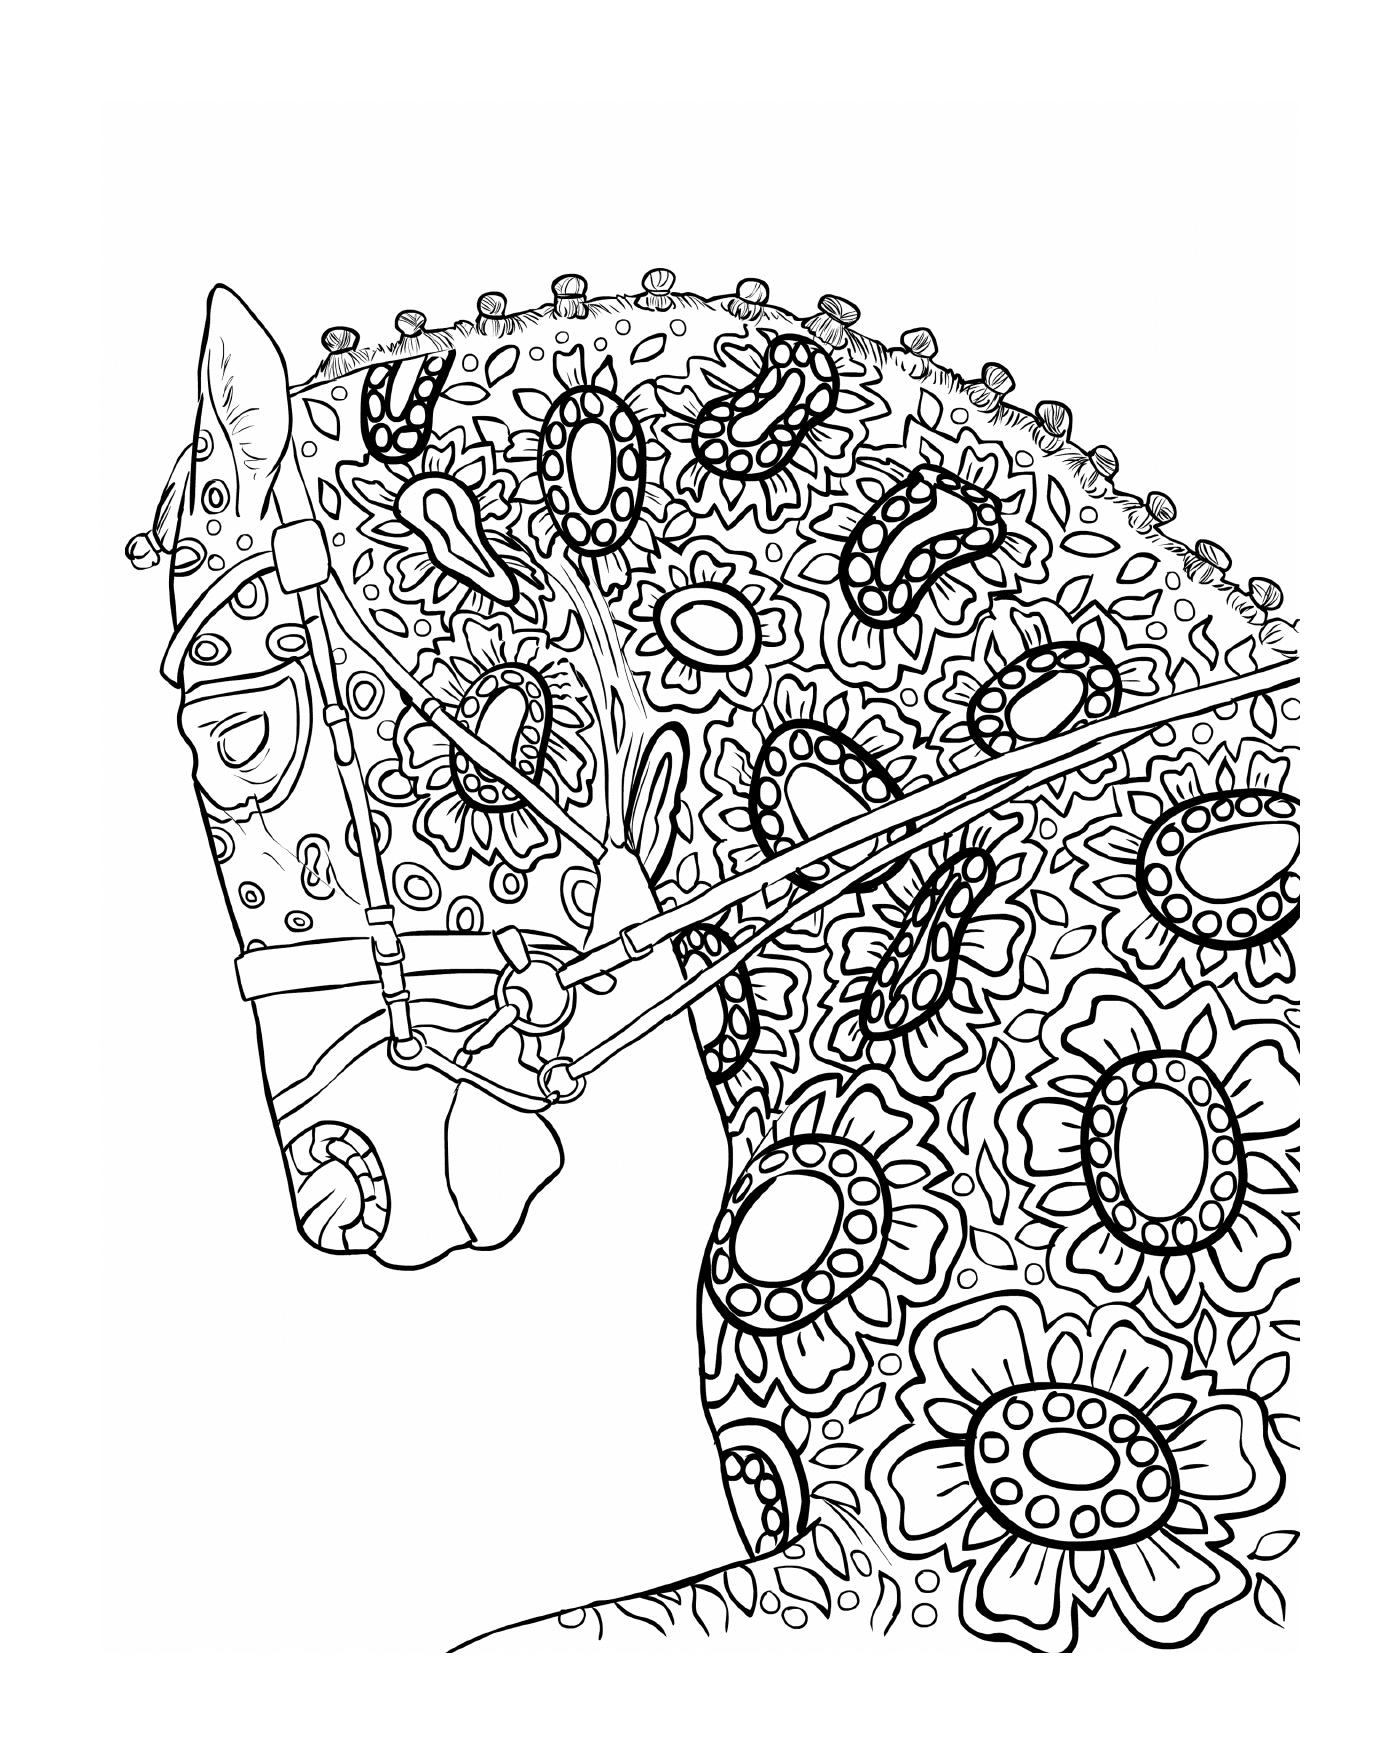  La cabeza de un caballo con motivos florales 